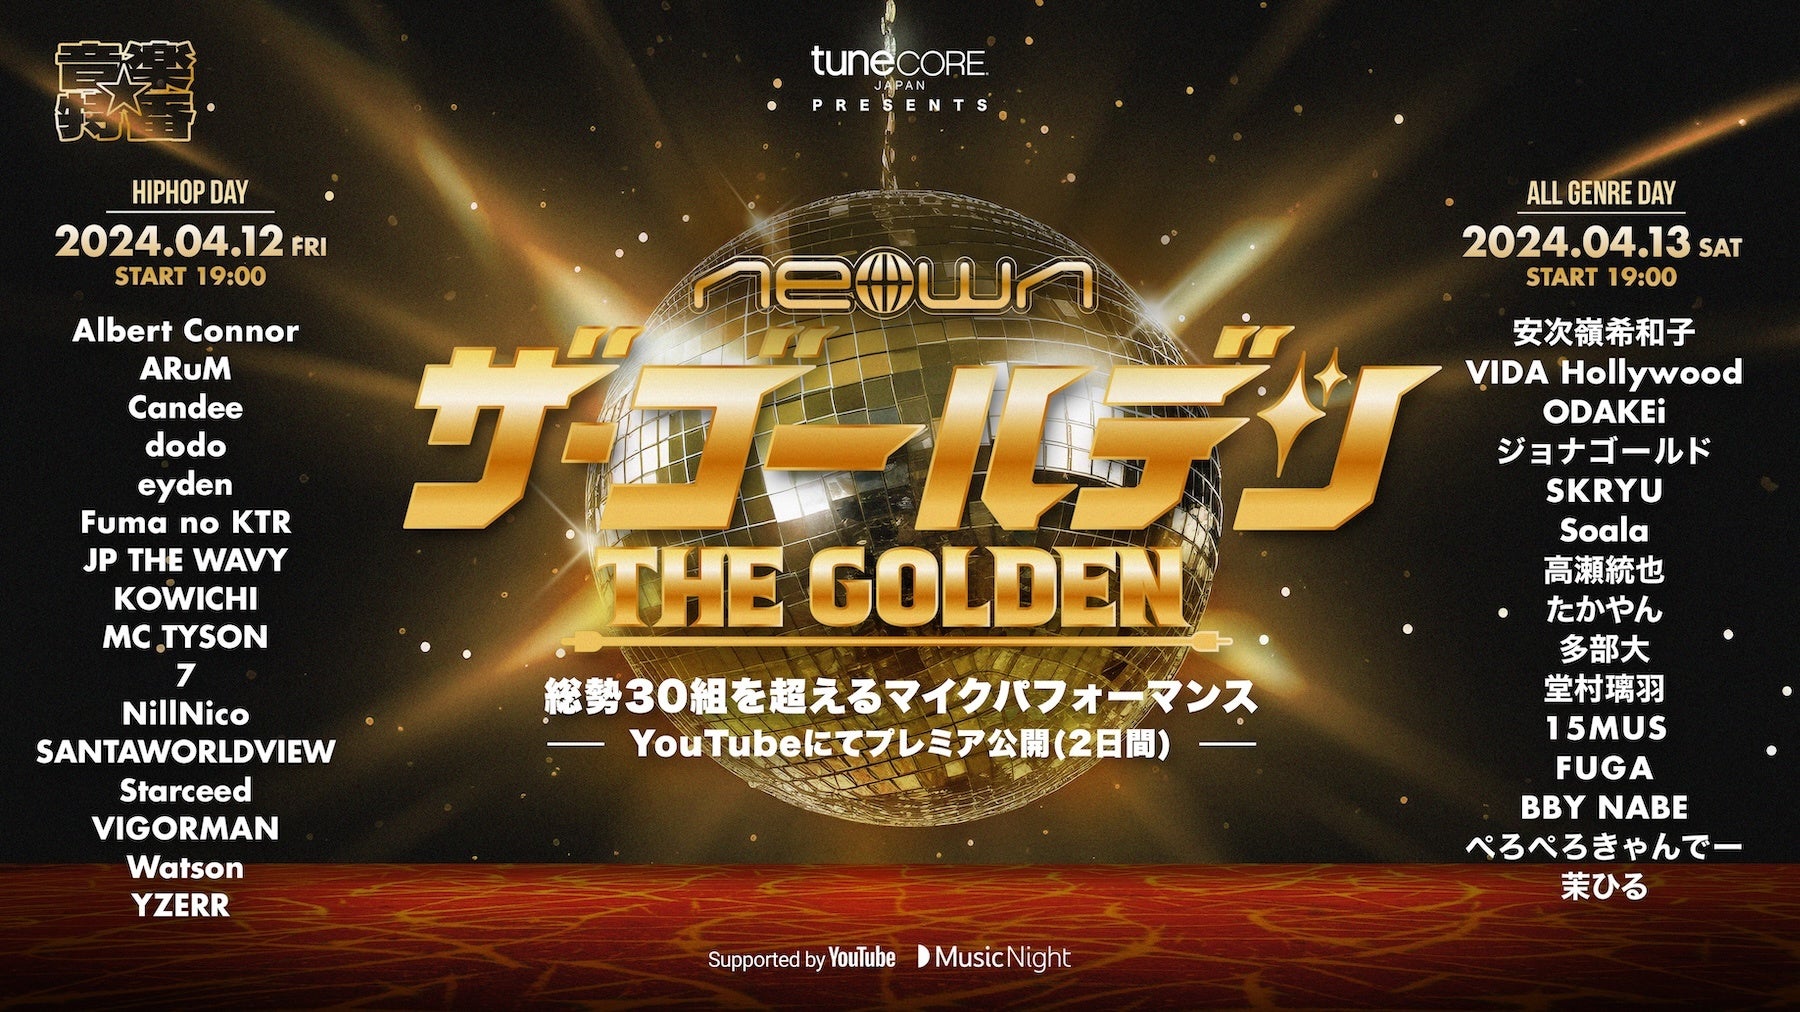 TuneCore Japanɂ鉹y gNEOWN: THE GOLDENh Supported by YouTube@2Ԃɂ킽v~AzM